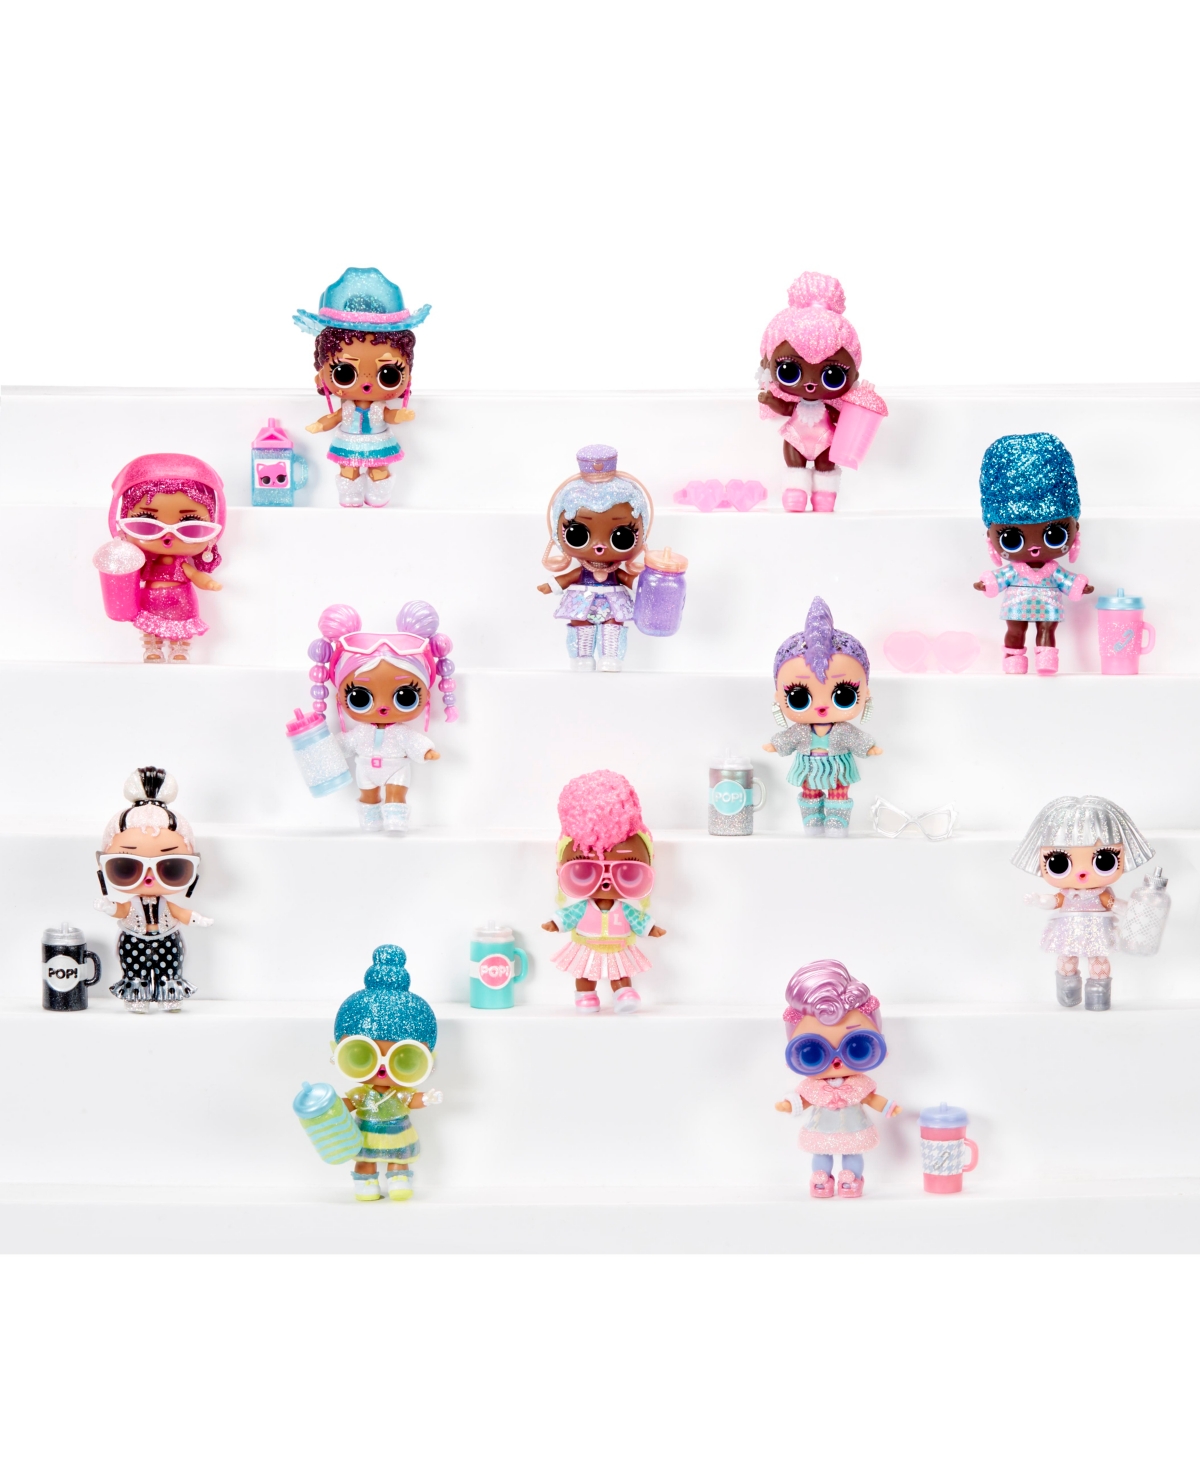 L.O.L. Surprise! Dolls: Color Change 2-in-1 Me & My Lil Sis & Lil Pet, Fashion Show Dolls w/ 8 Surprises $3.99 each + Free Shipping w/ $25+